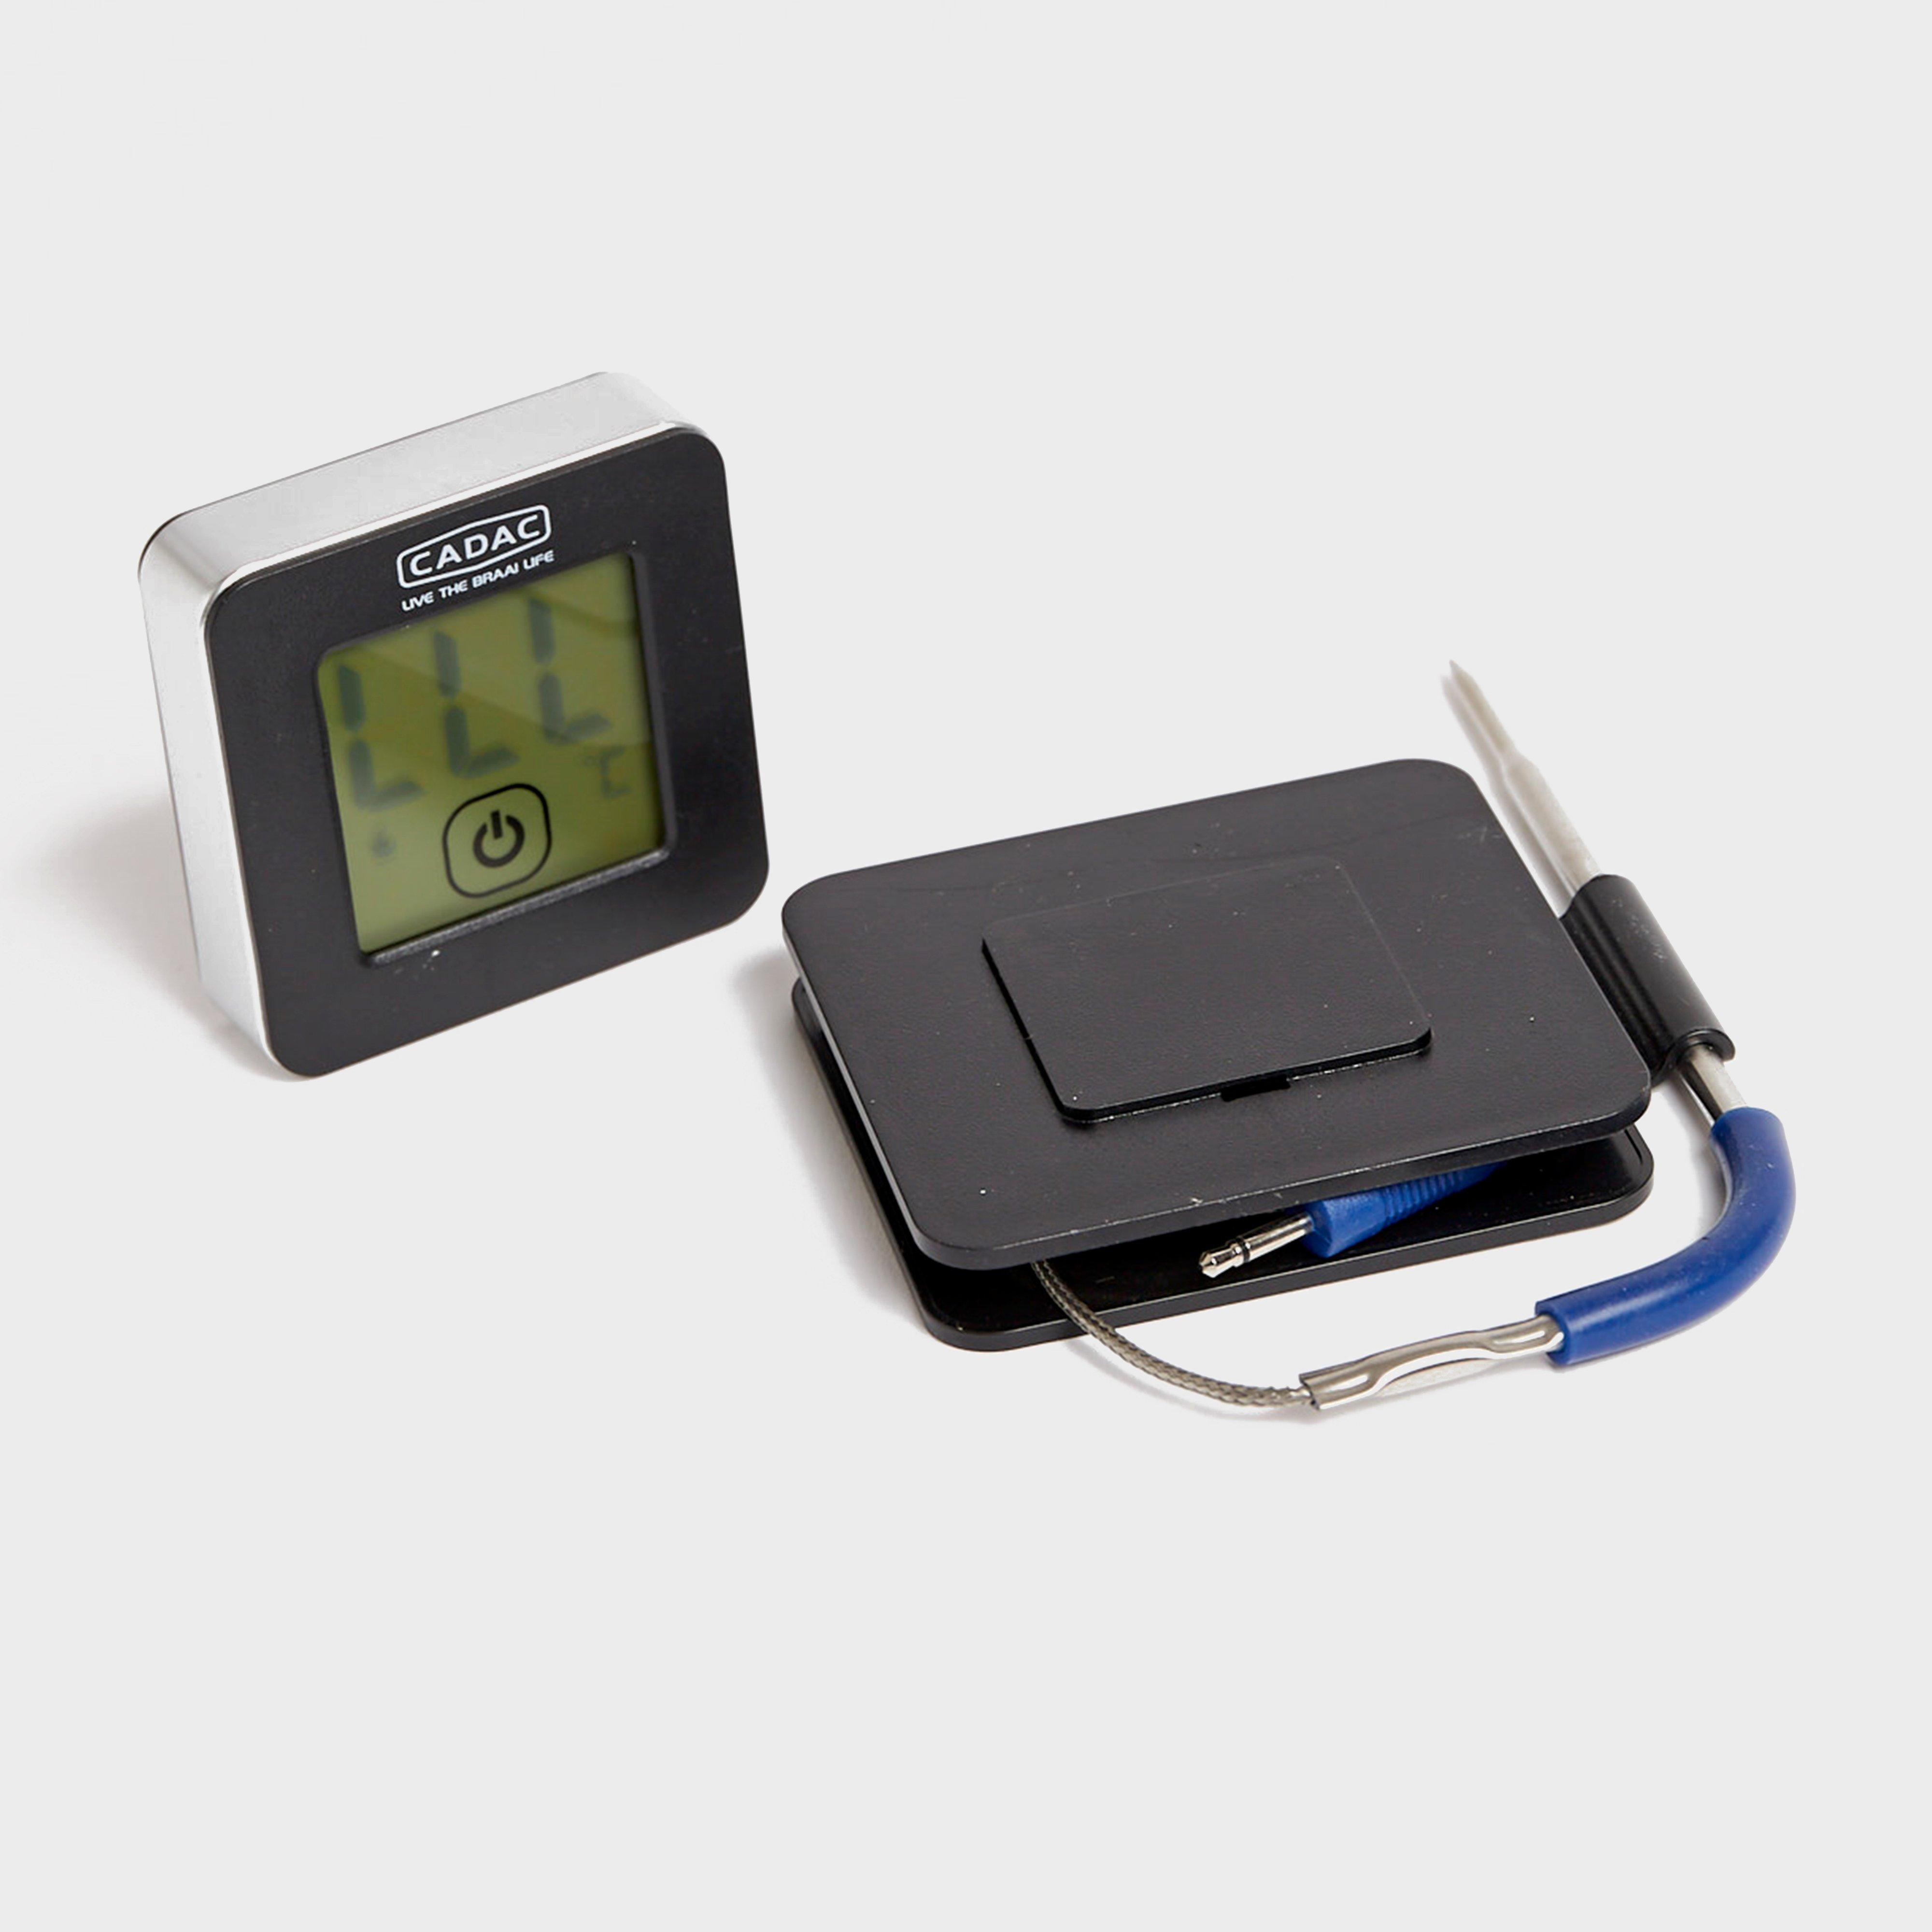 Cadac i-Braai Bluetooth Food Thermometer Review